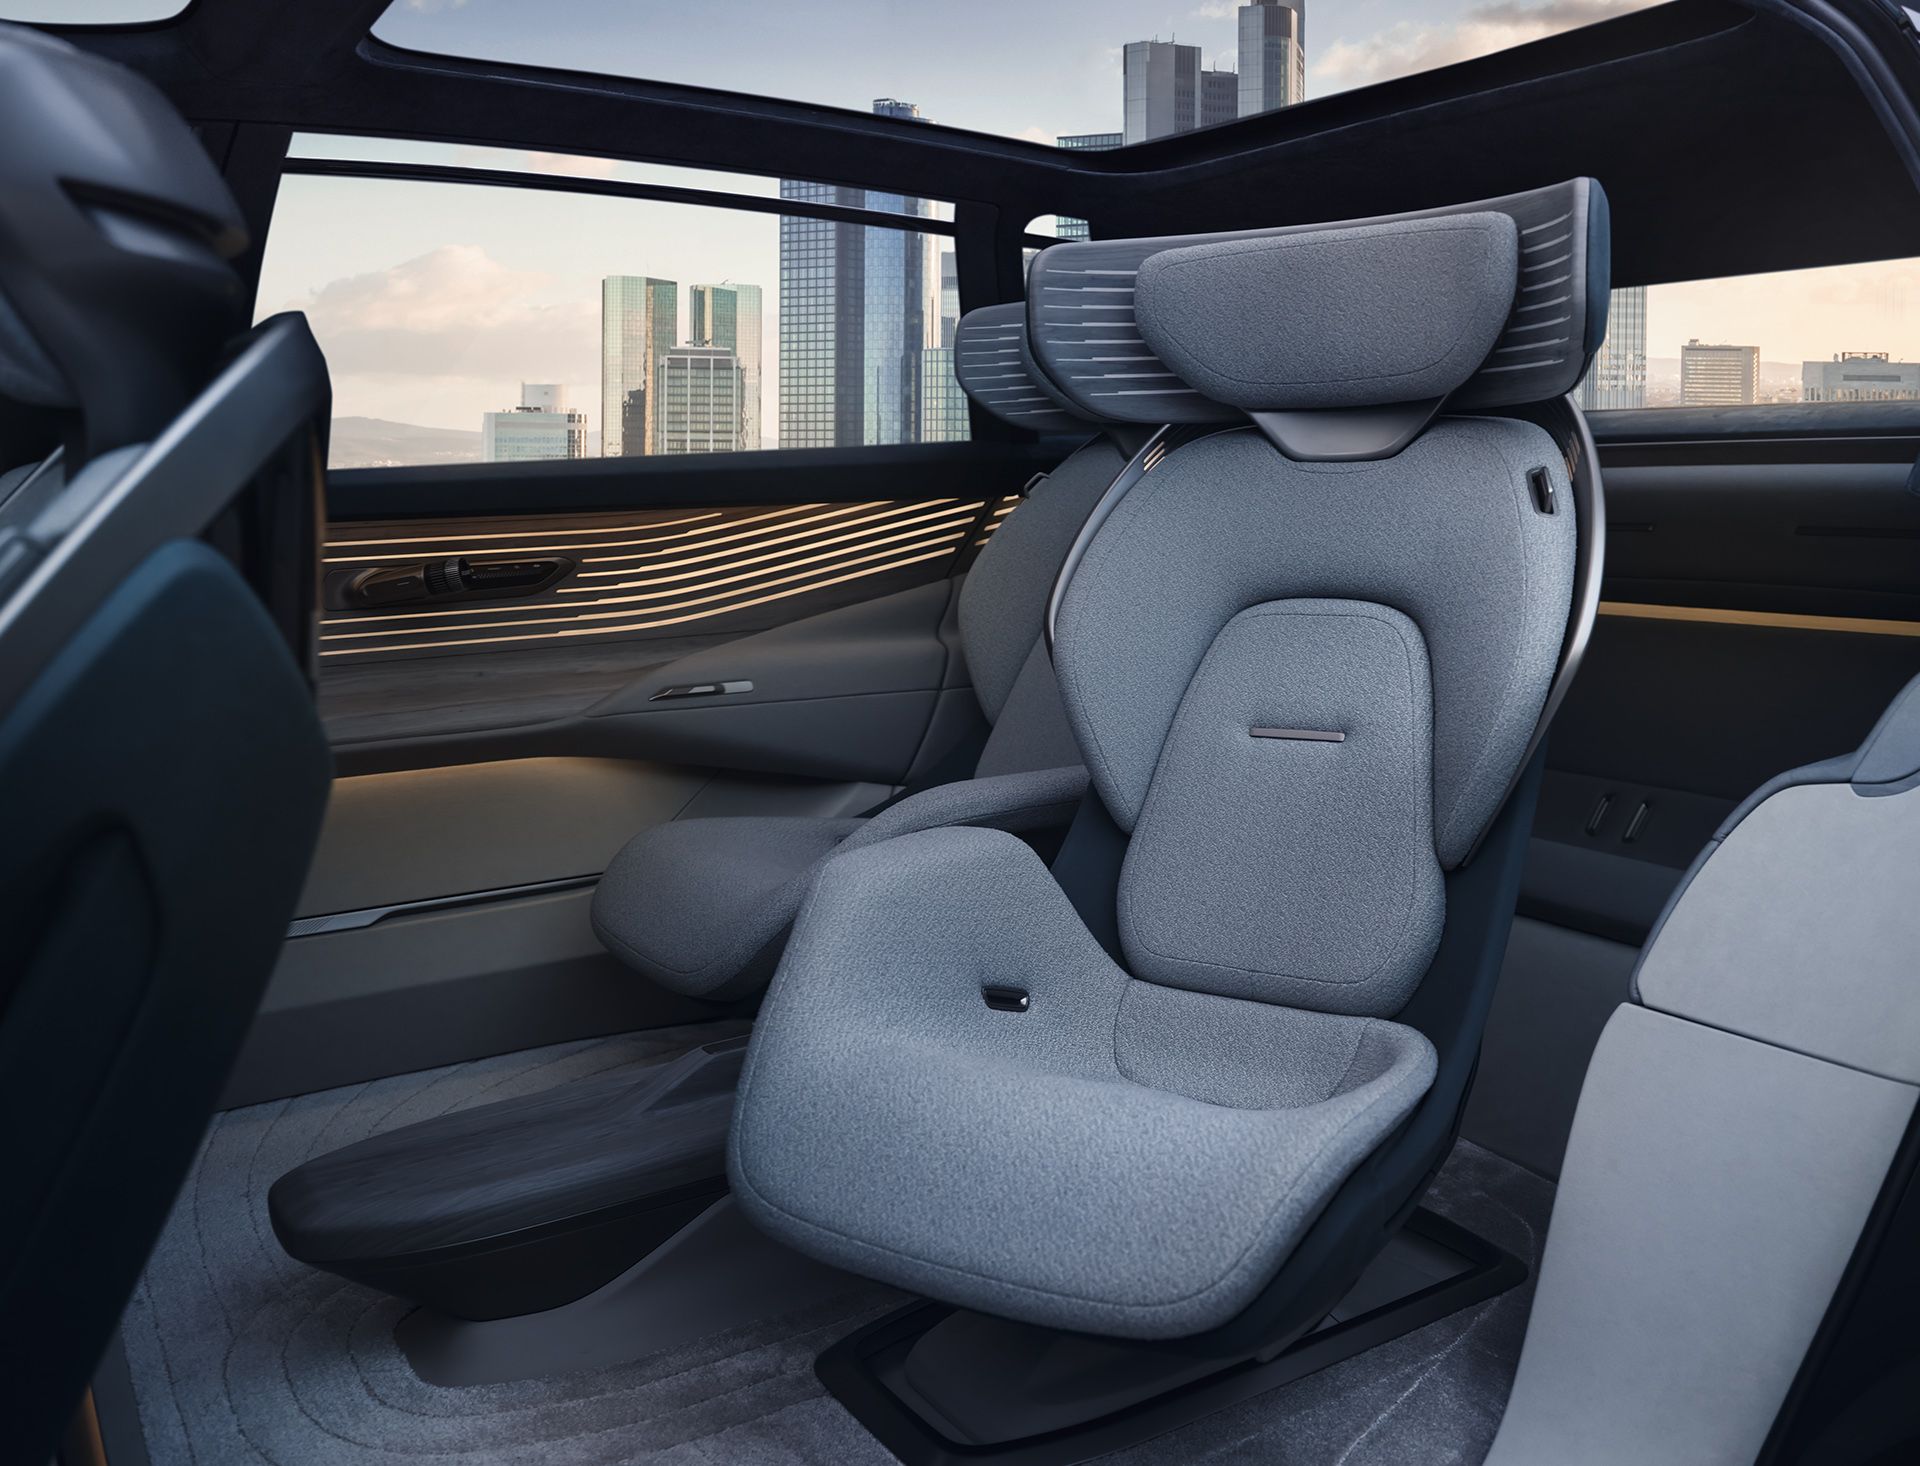 Sitze im Innenraum des Audi urbansphere concept.